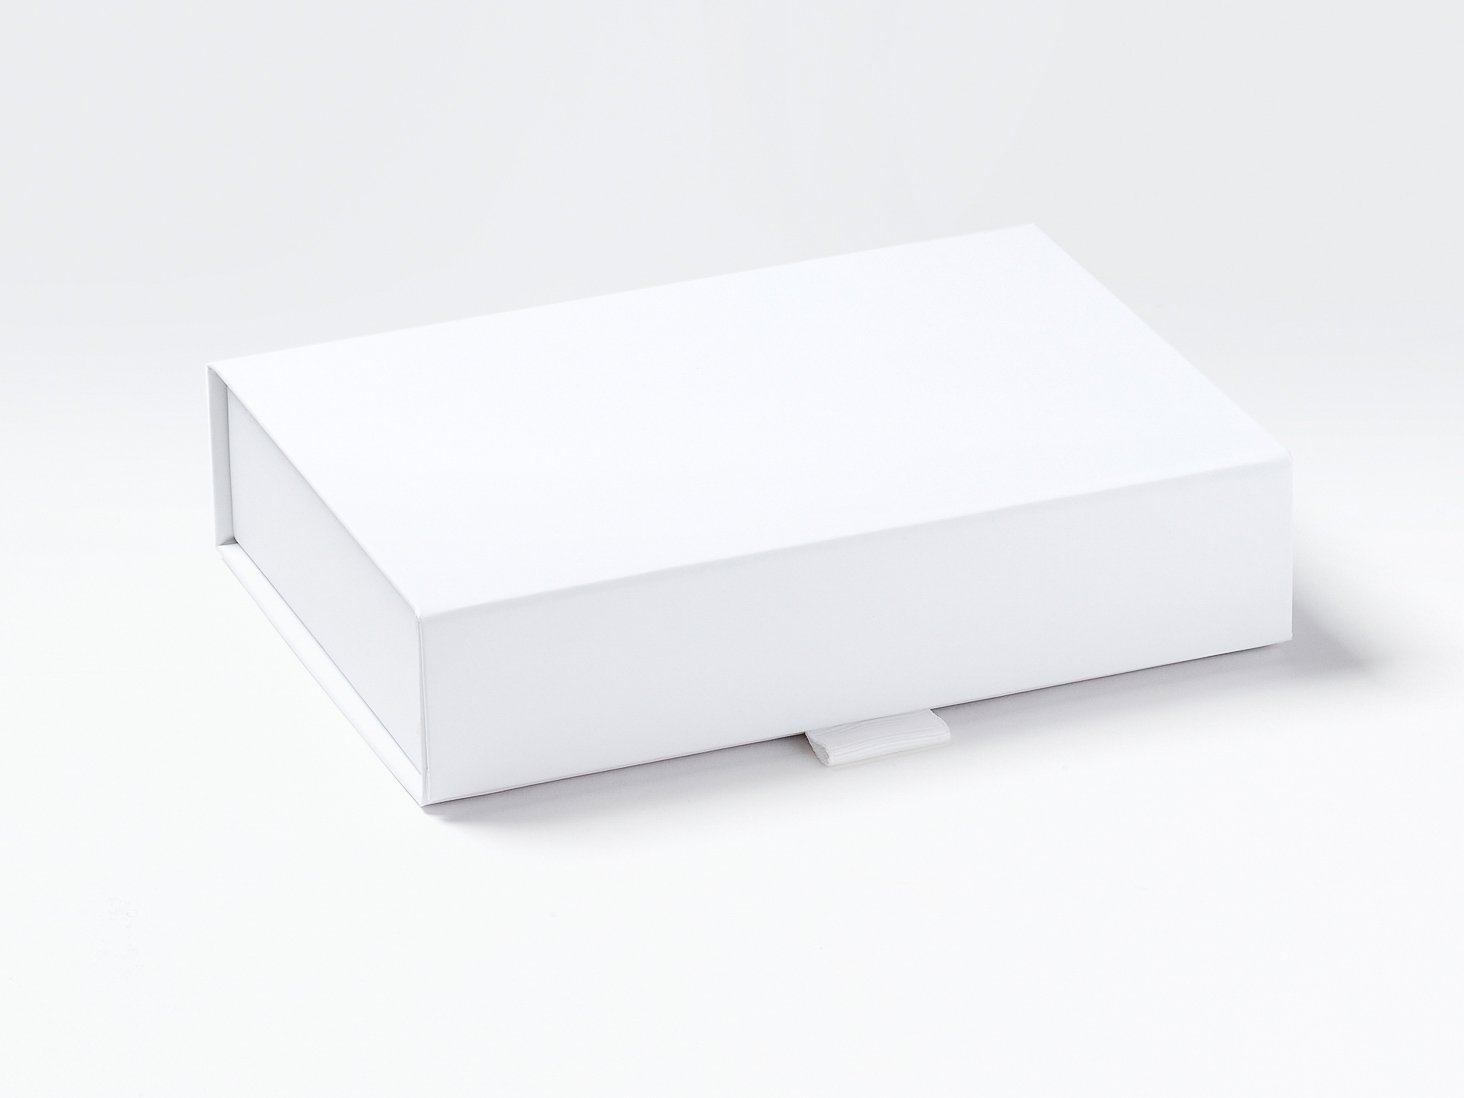 CHANEL Gift Box + Gift Bag SET Authentic Black & White NEW 9 x 5.5 x 3